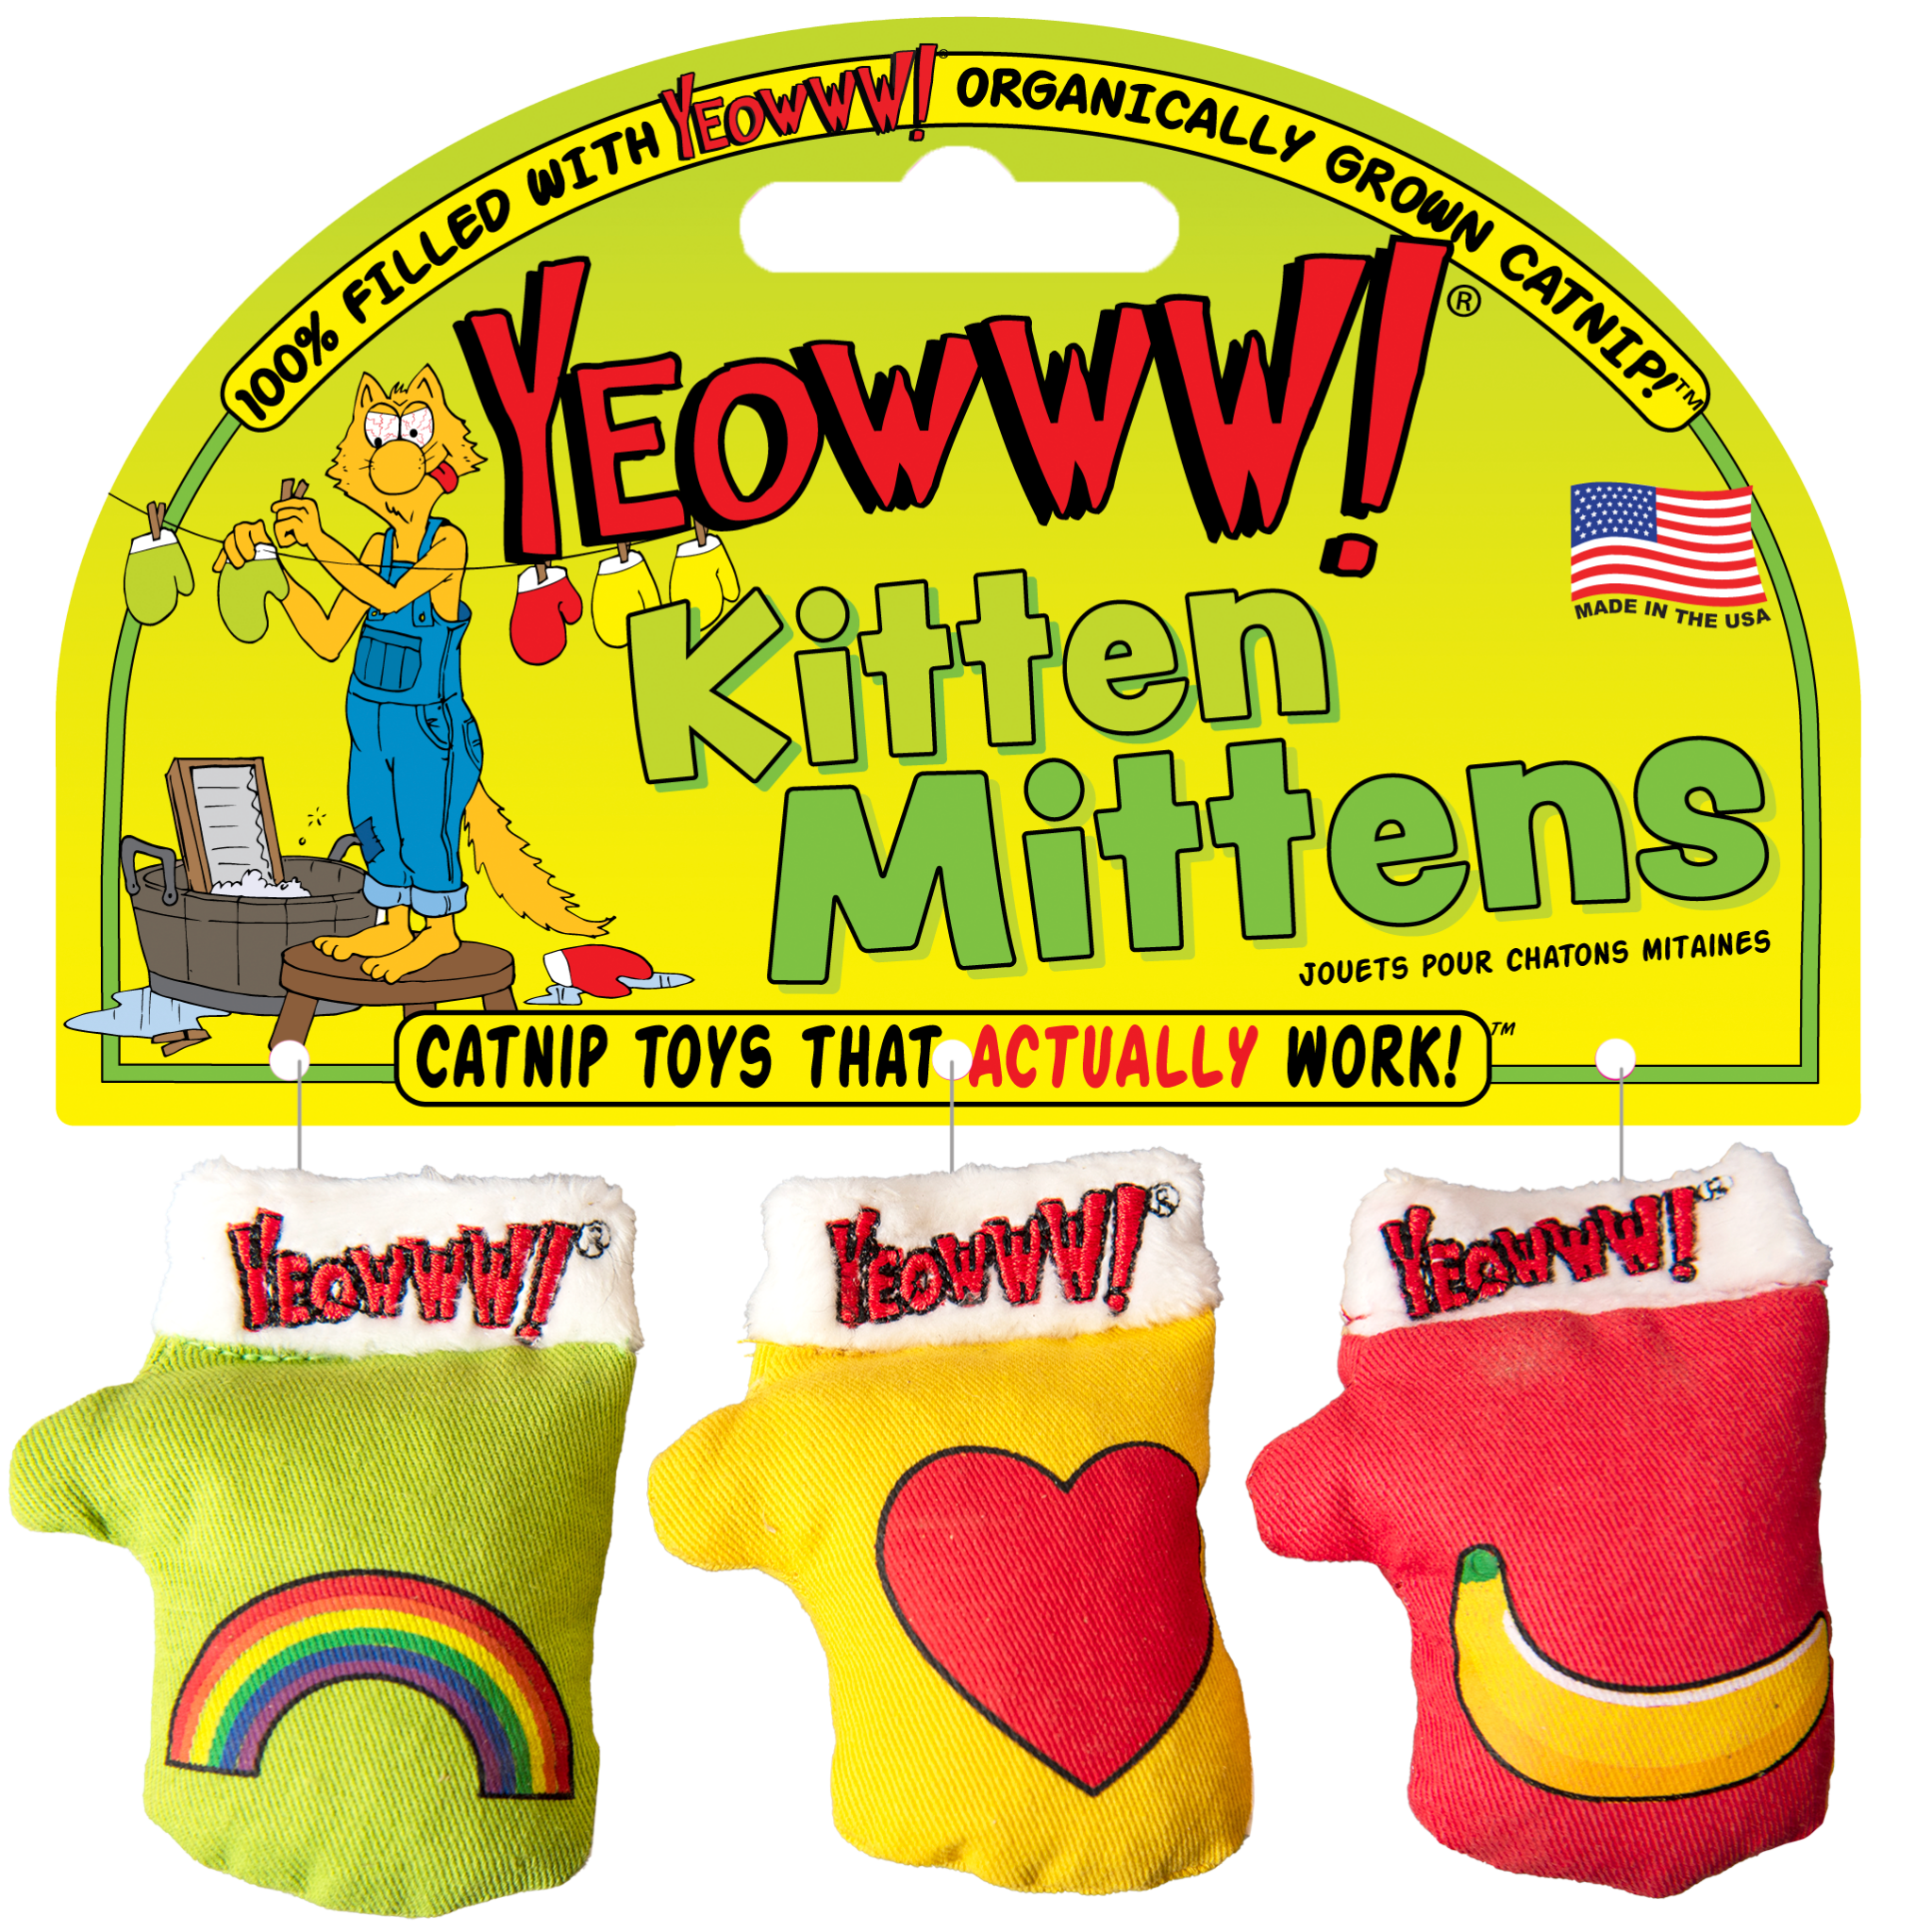 Yeowww Catnip Kitten Mittens Cat Toy 3